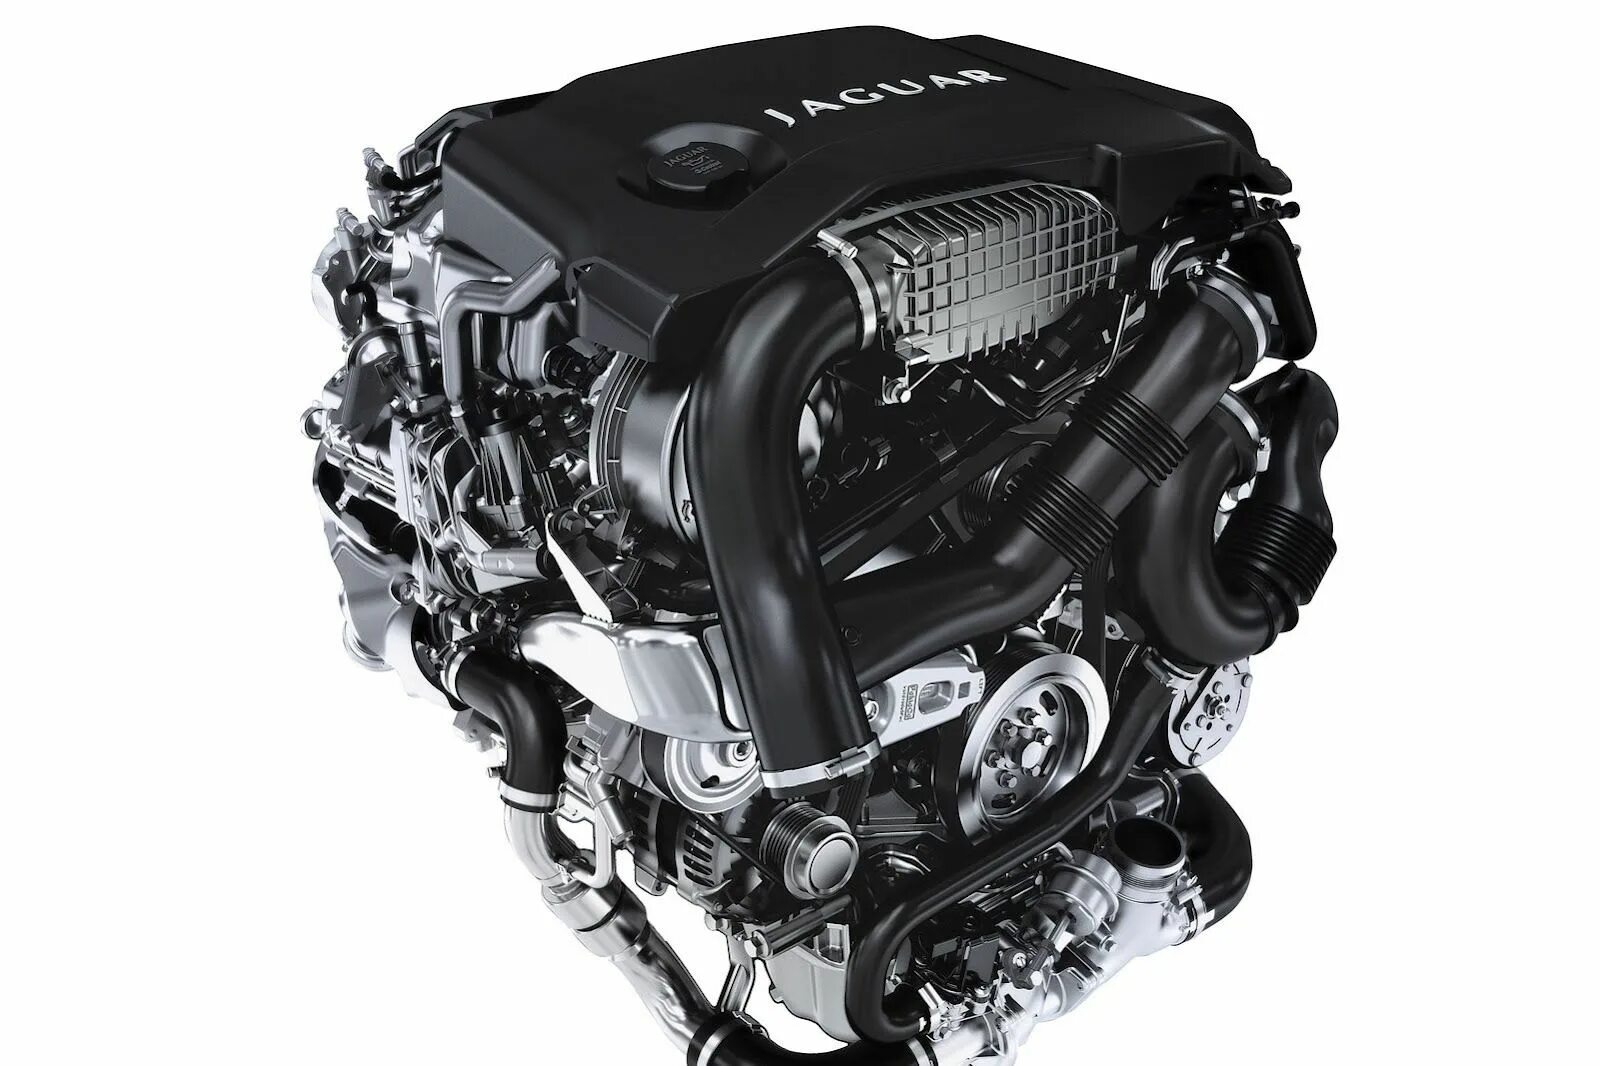 03 0 l 0 0. Мотор Ягуар 2,0 дизель. Мотор Ягуар XF 3.0. Двигатель Jaguar XF 3.0. Jaguar 3.0 380 л.с. мотор.